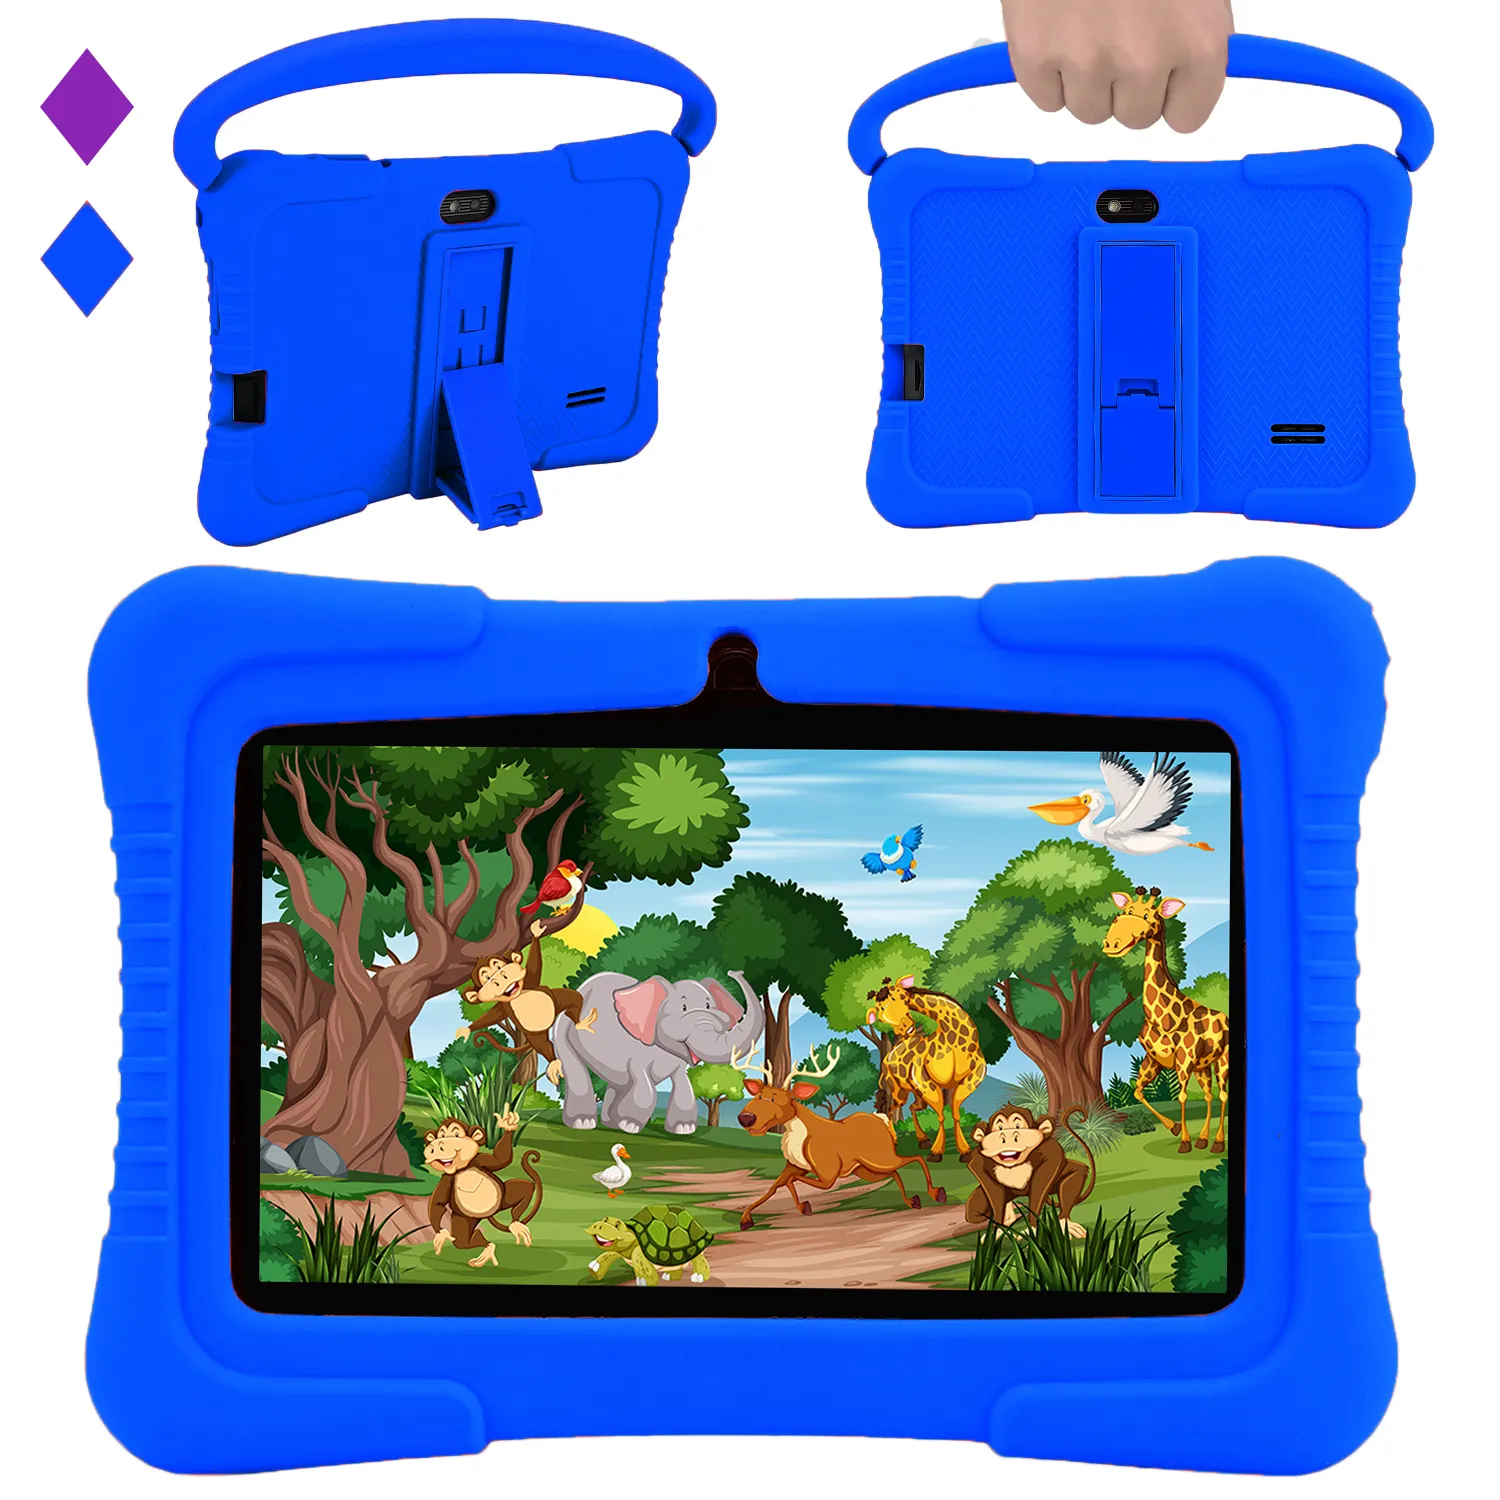 Veidoo 어린이 태블릿 PC 7 인치 어린이를위한 안드로이드 태블릿 2GB 램 32GB 저장 유아 태블릿 IPS 화면 부모 제어